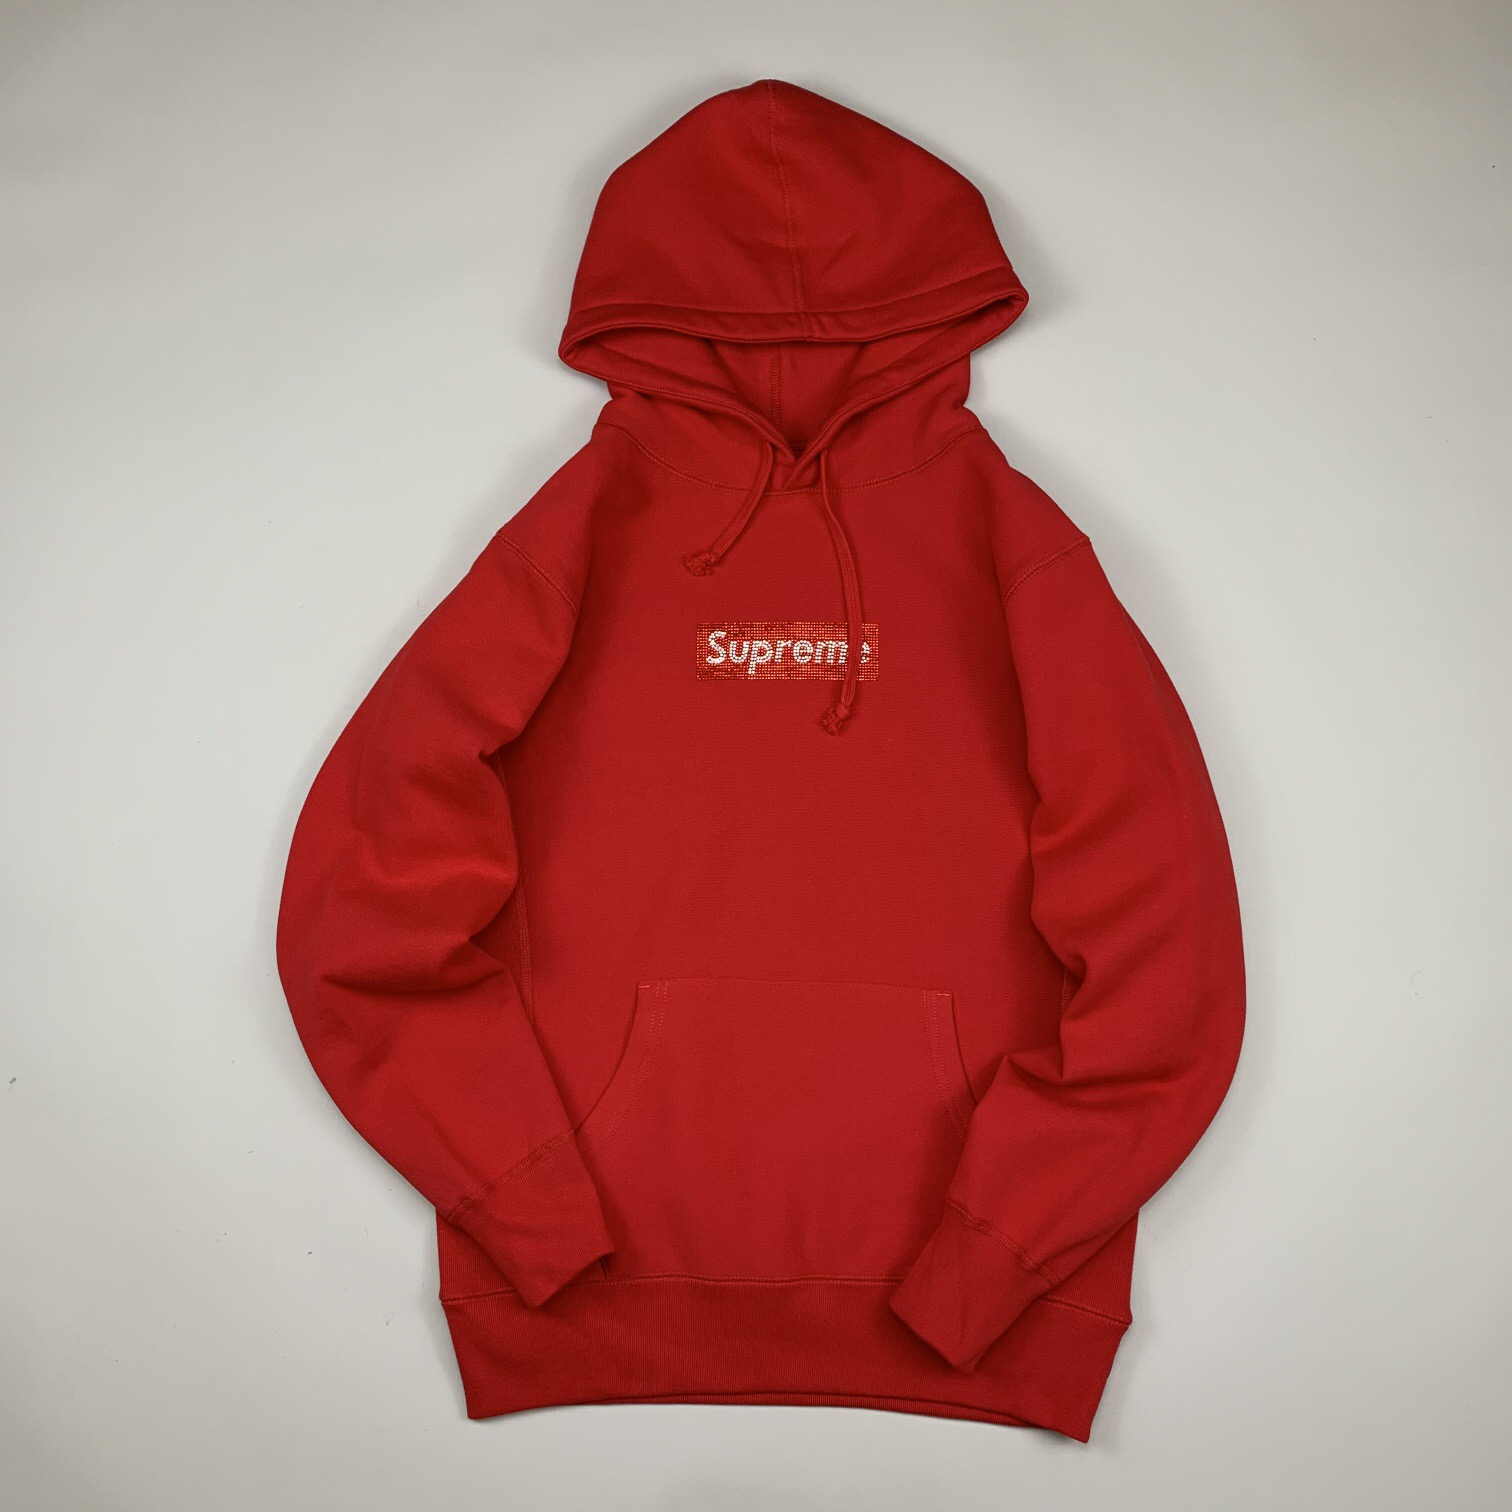 Buy Replica Supreme x Swarovski Box Logo Hooded Sweatshirt Red - Buy